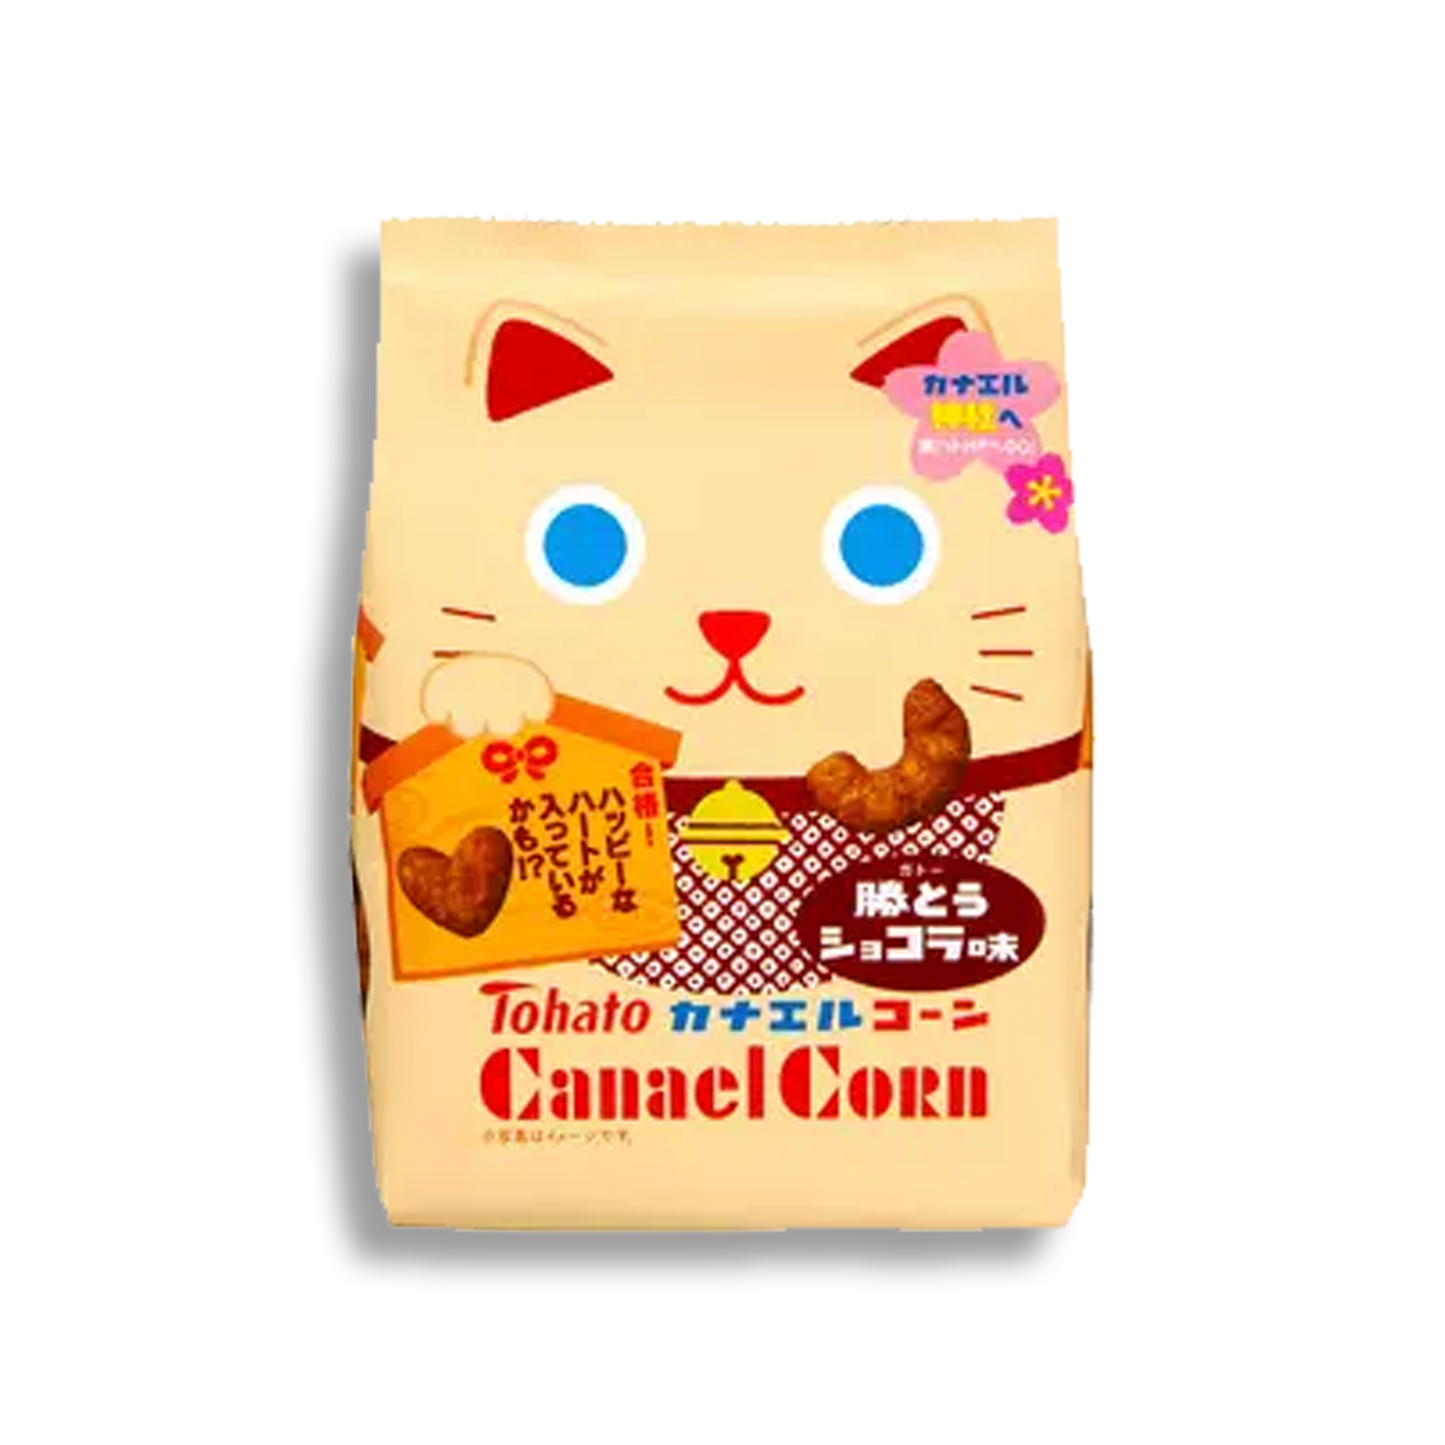 Caramel Corn - Kanael Corn Lucky Cat Edition